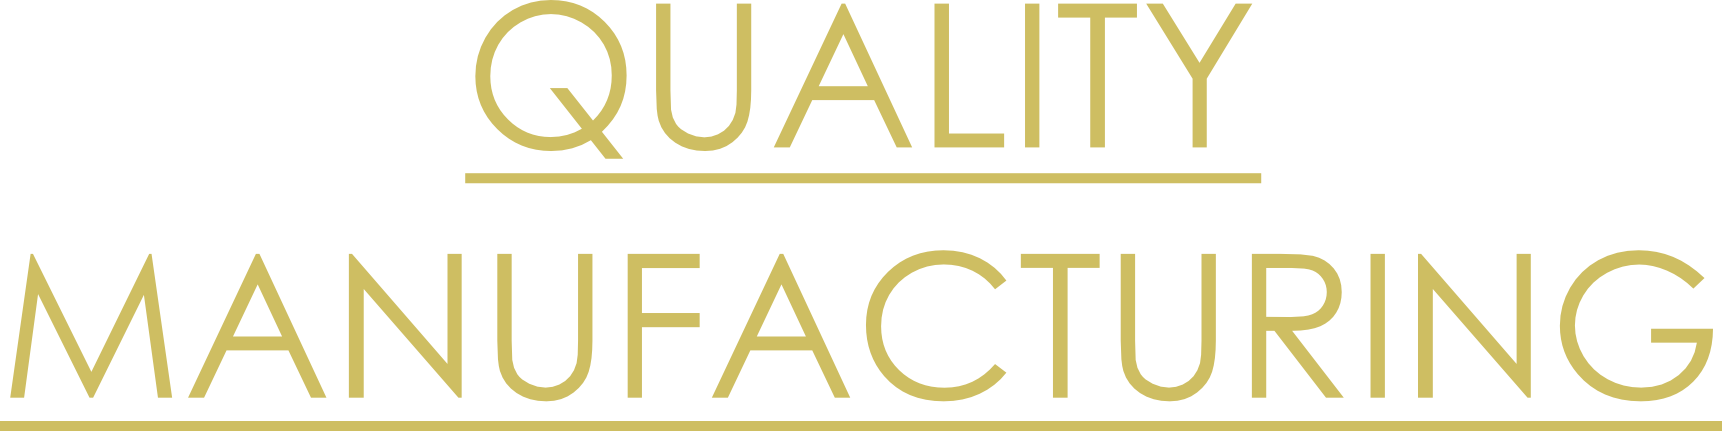 Quality Manufacturing Logo